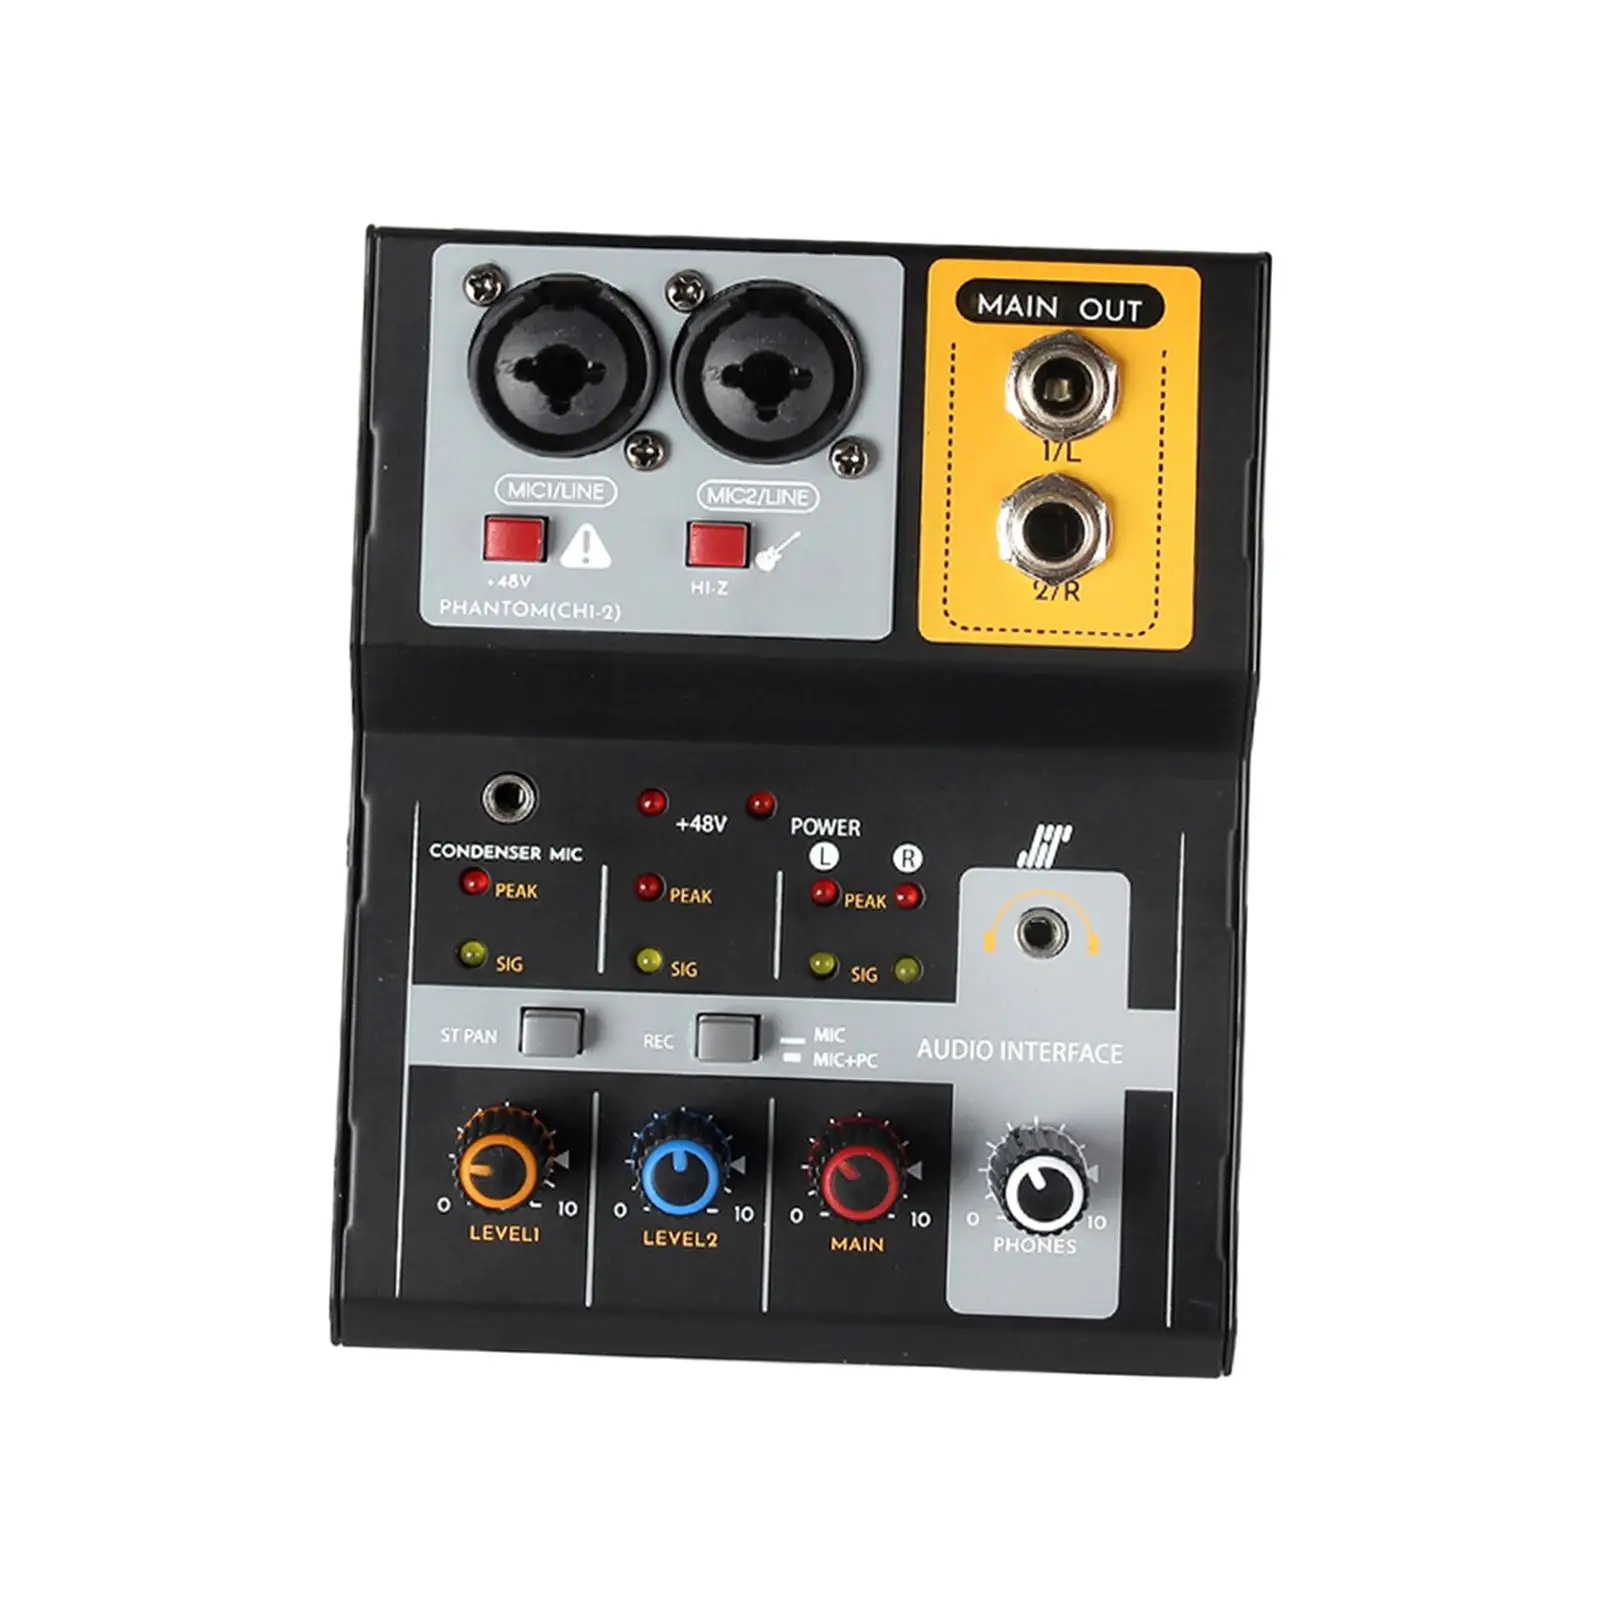 Audio Sound Mixer with Sound Card USB Stereo Professional 48V Digital Mixer for Live KTV Music Recording Podcasting Studio Show